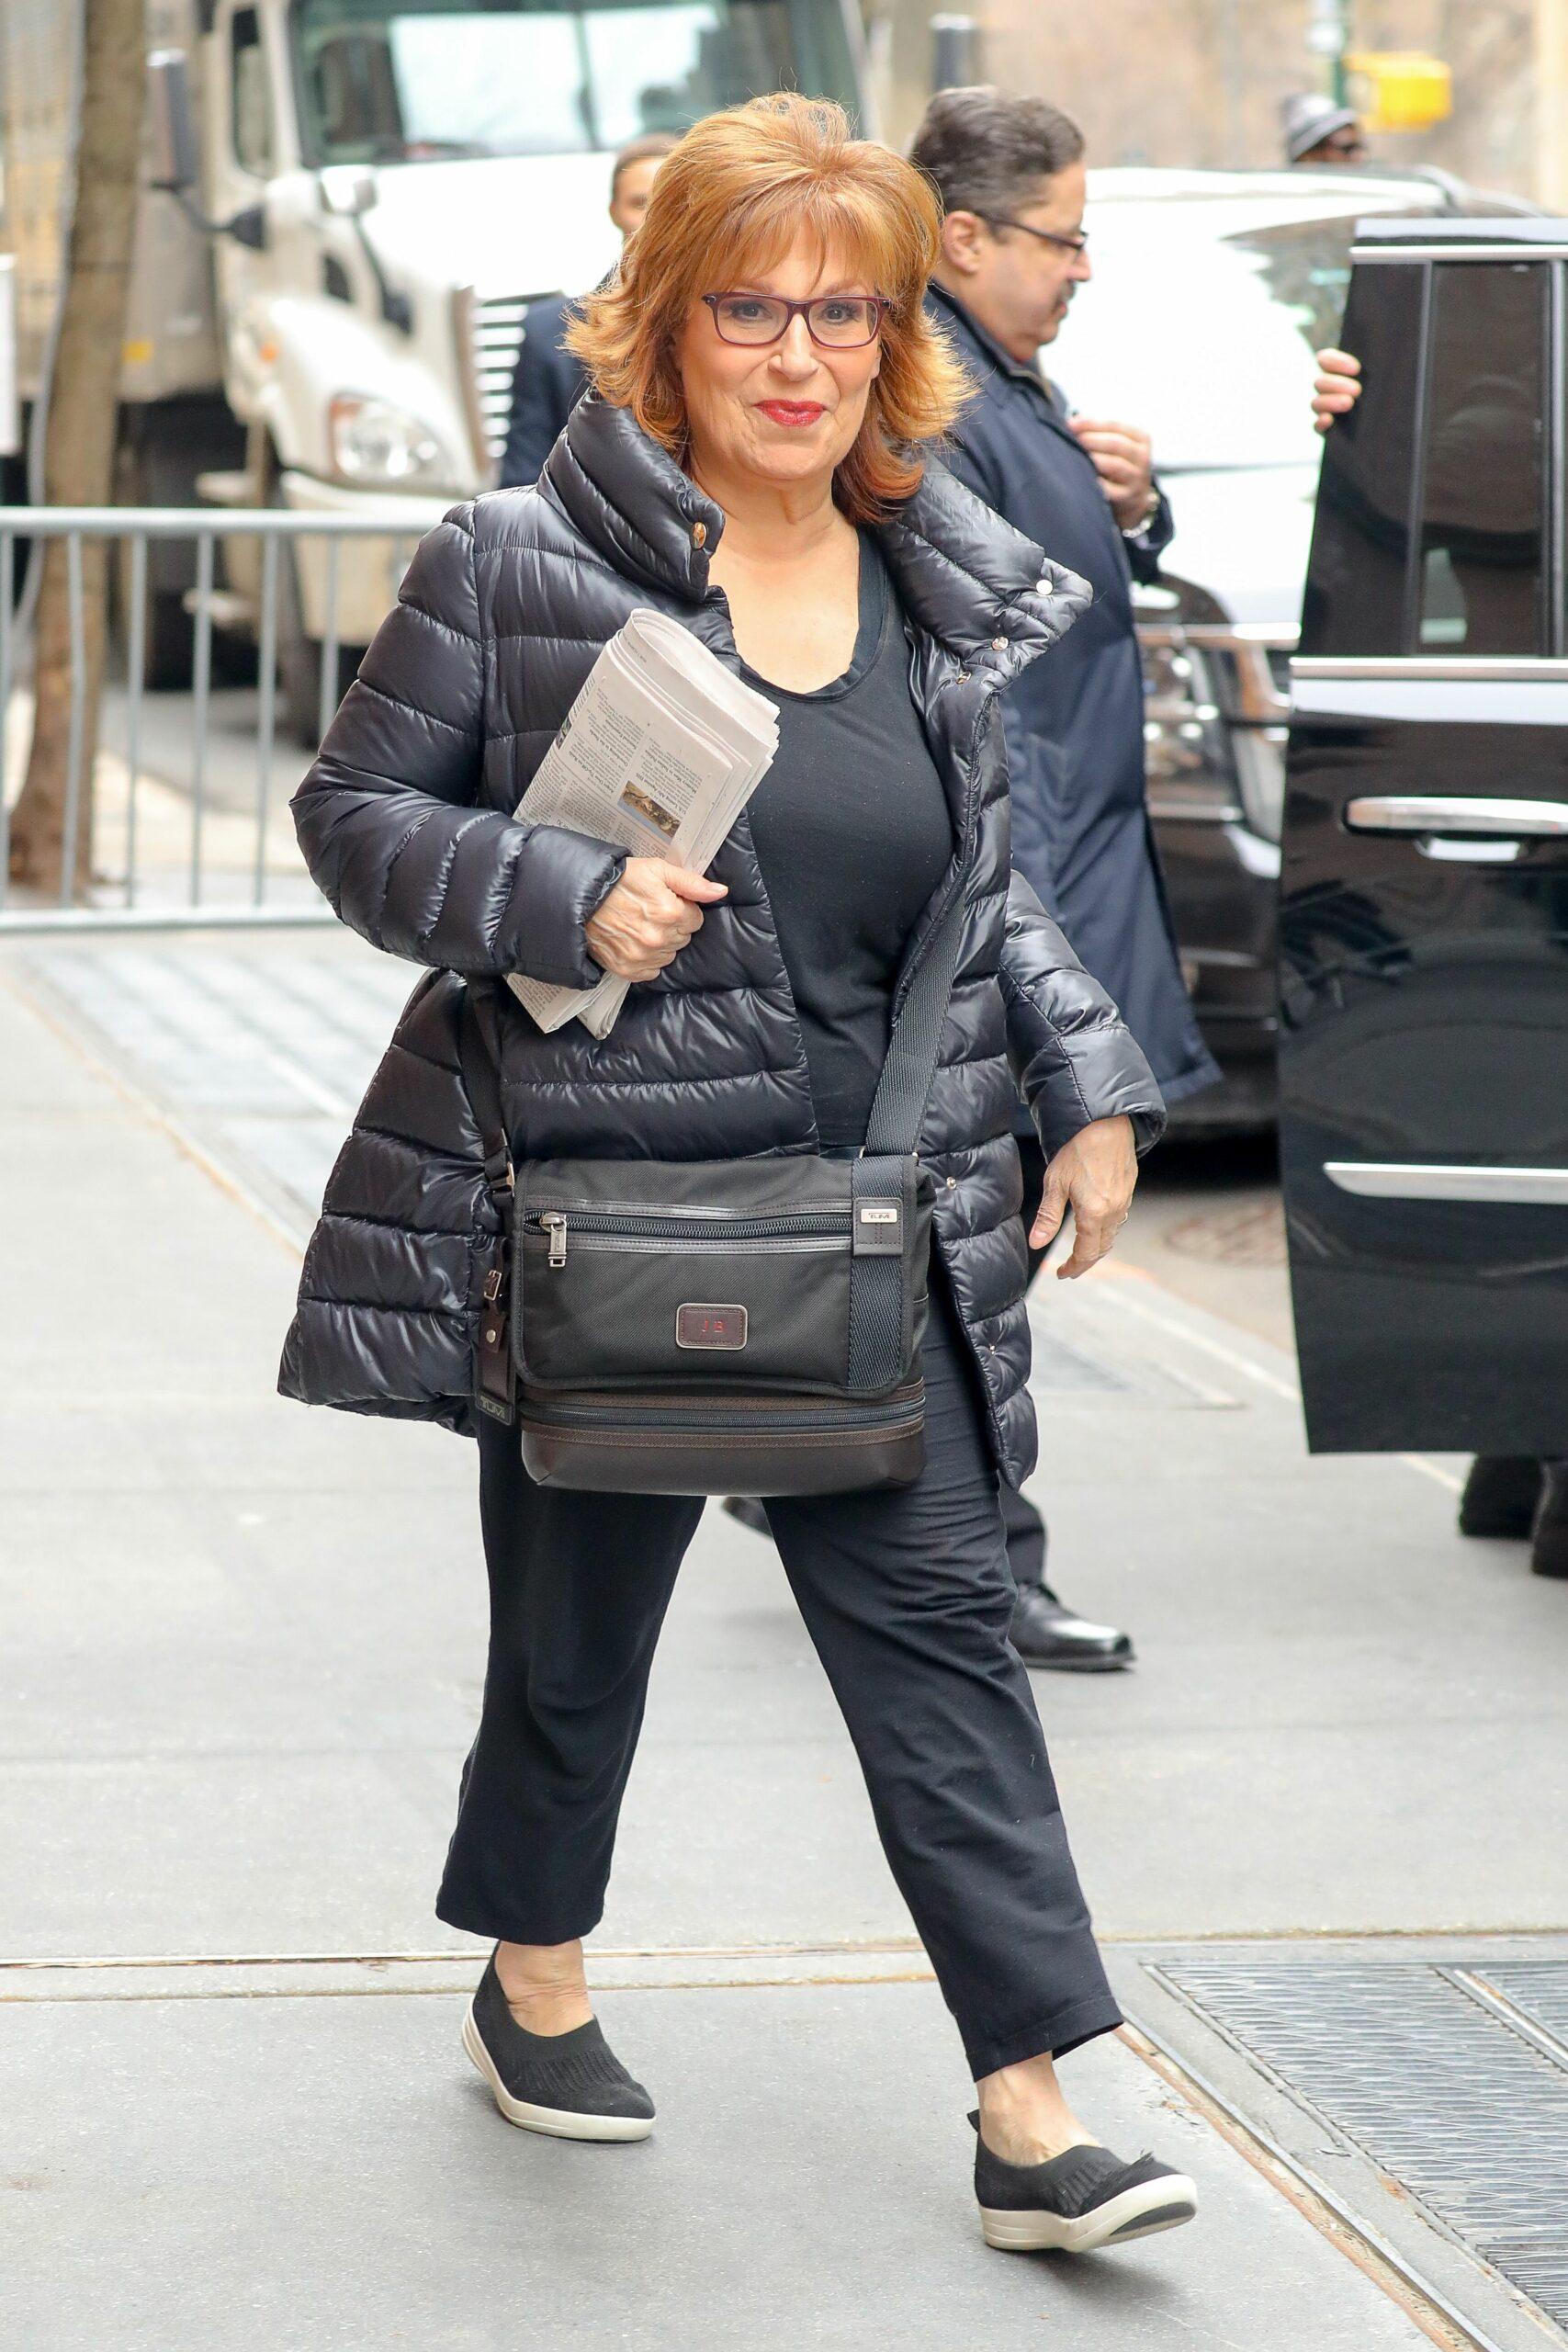 Joy Behar seen leaving the view in NYC